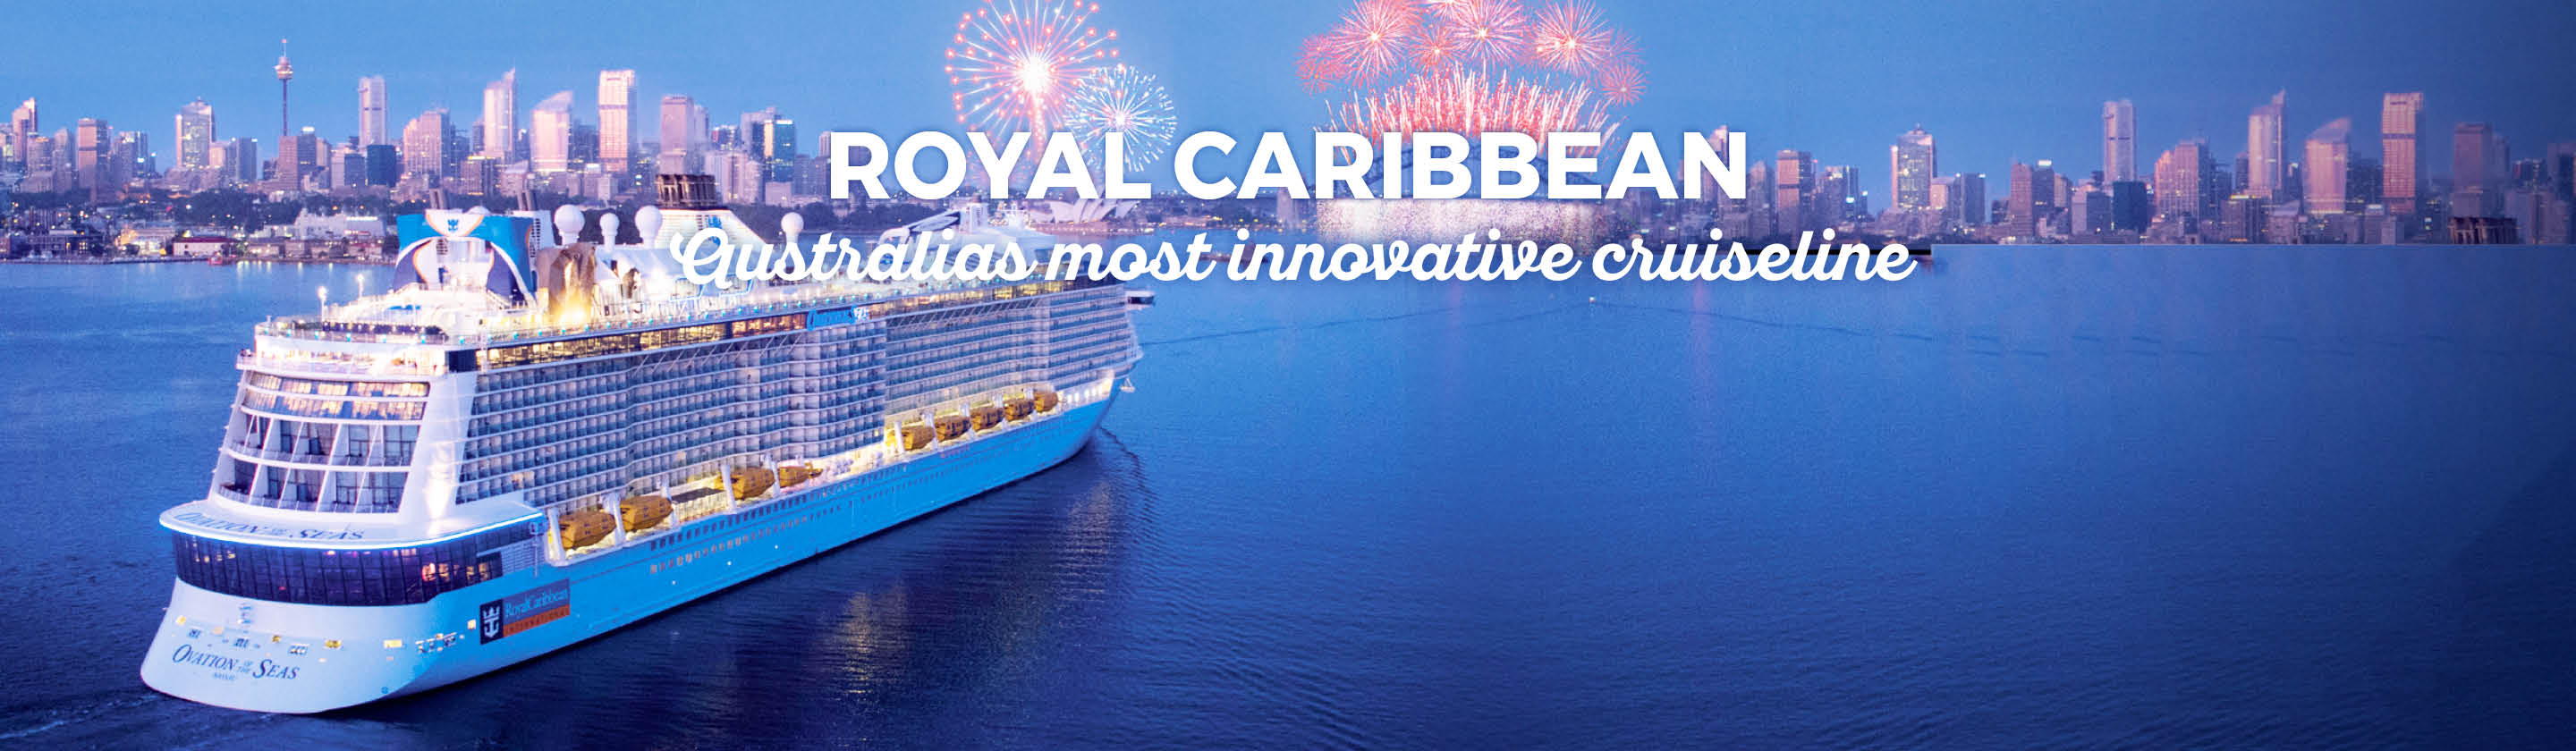 royal caribbean casino cruise offers